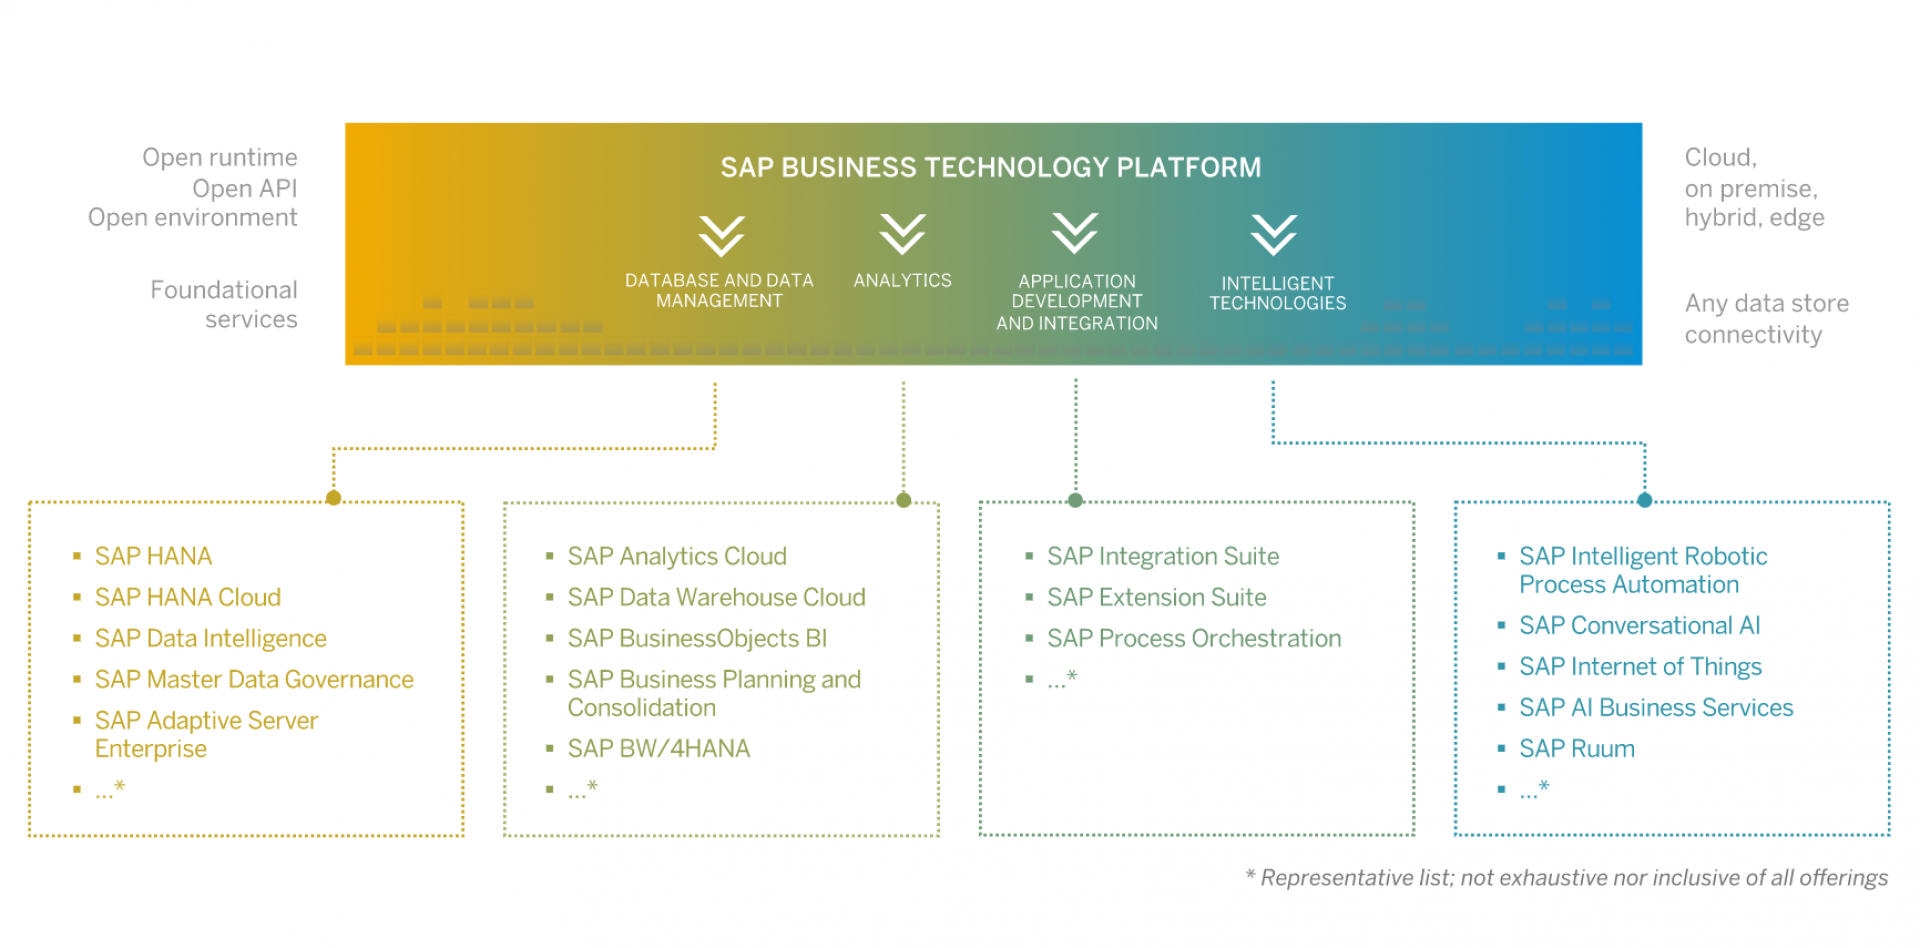 Figure 1: The SAP Business Technology Platform 